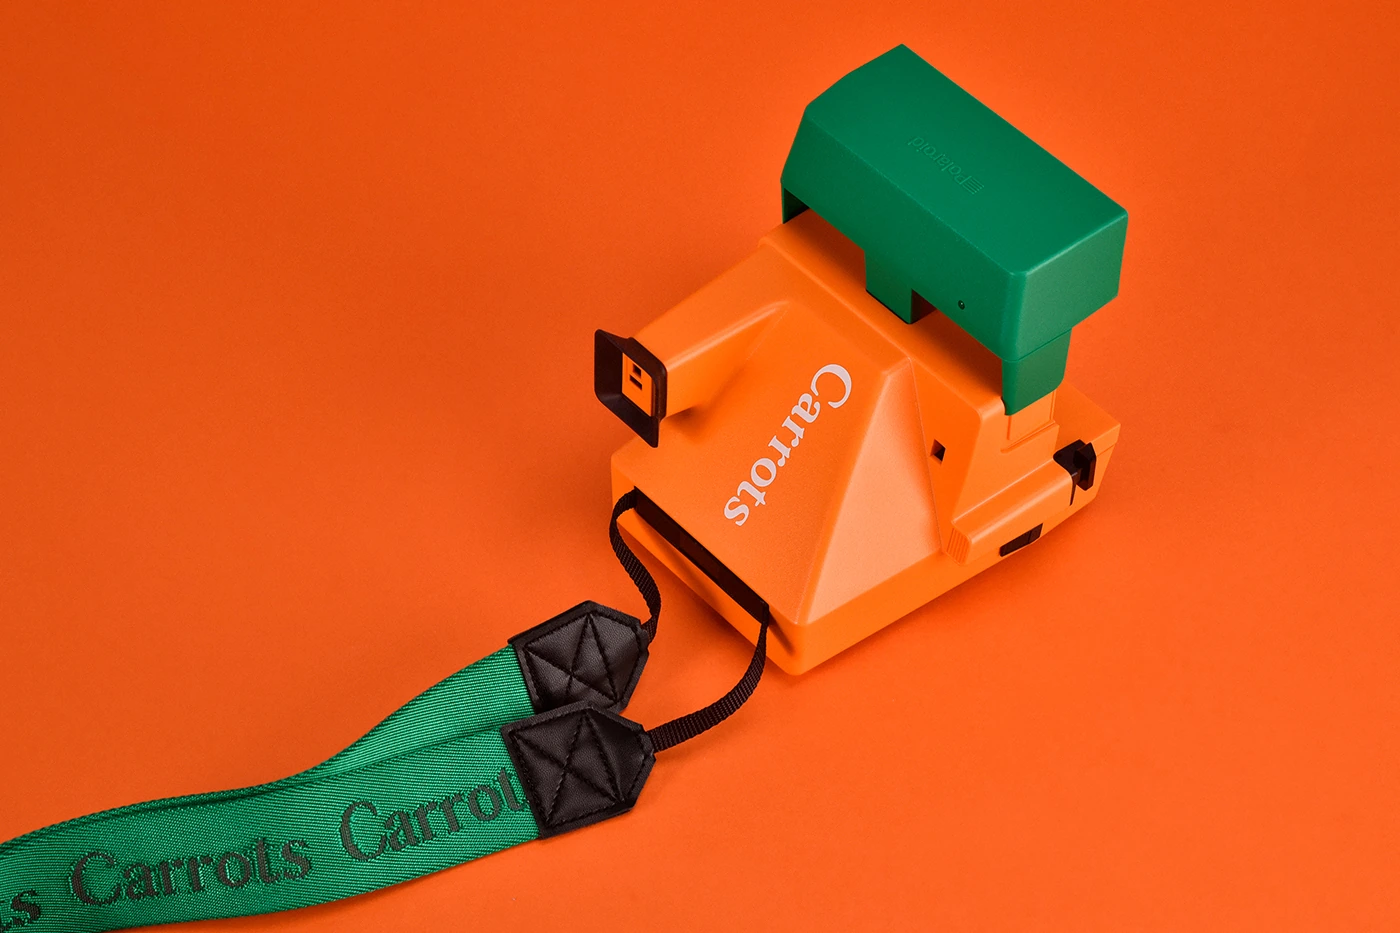 Retrospekt x Carrots 推出联名系列宝丽来相机